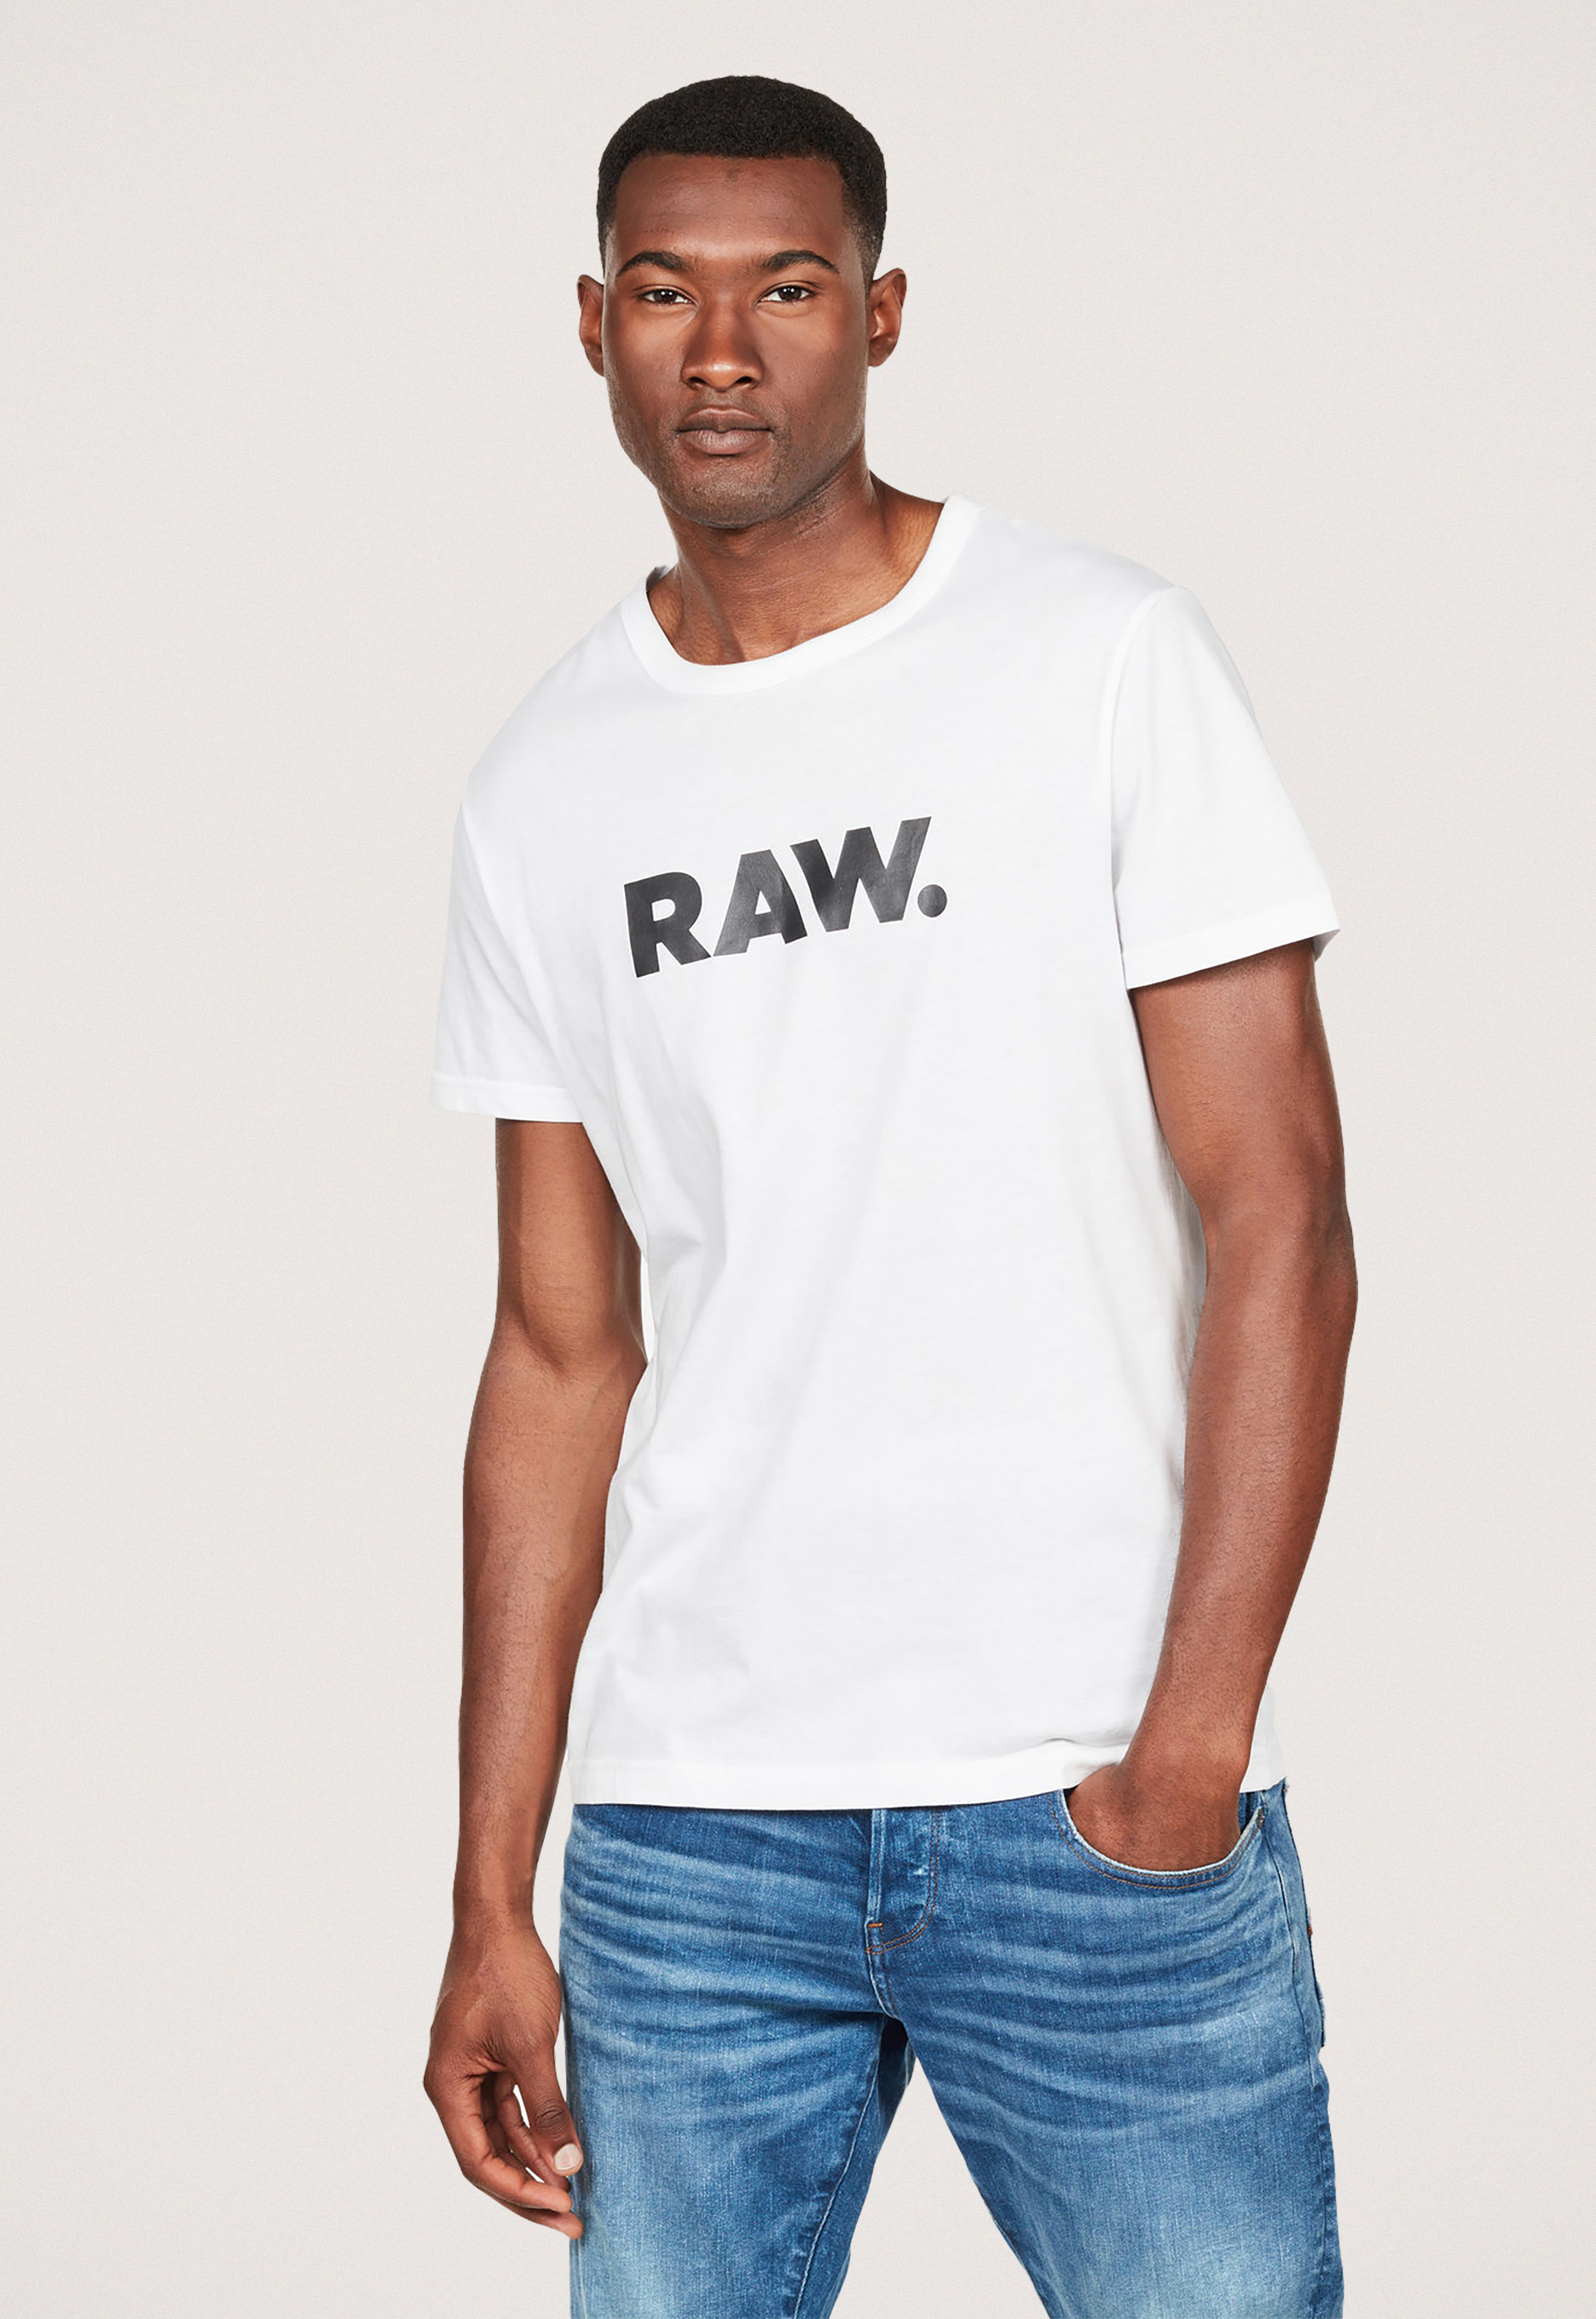 G-Star RAW D08512-8415 Holorn T-shirt